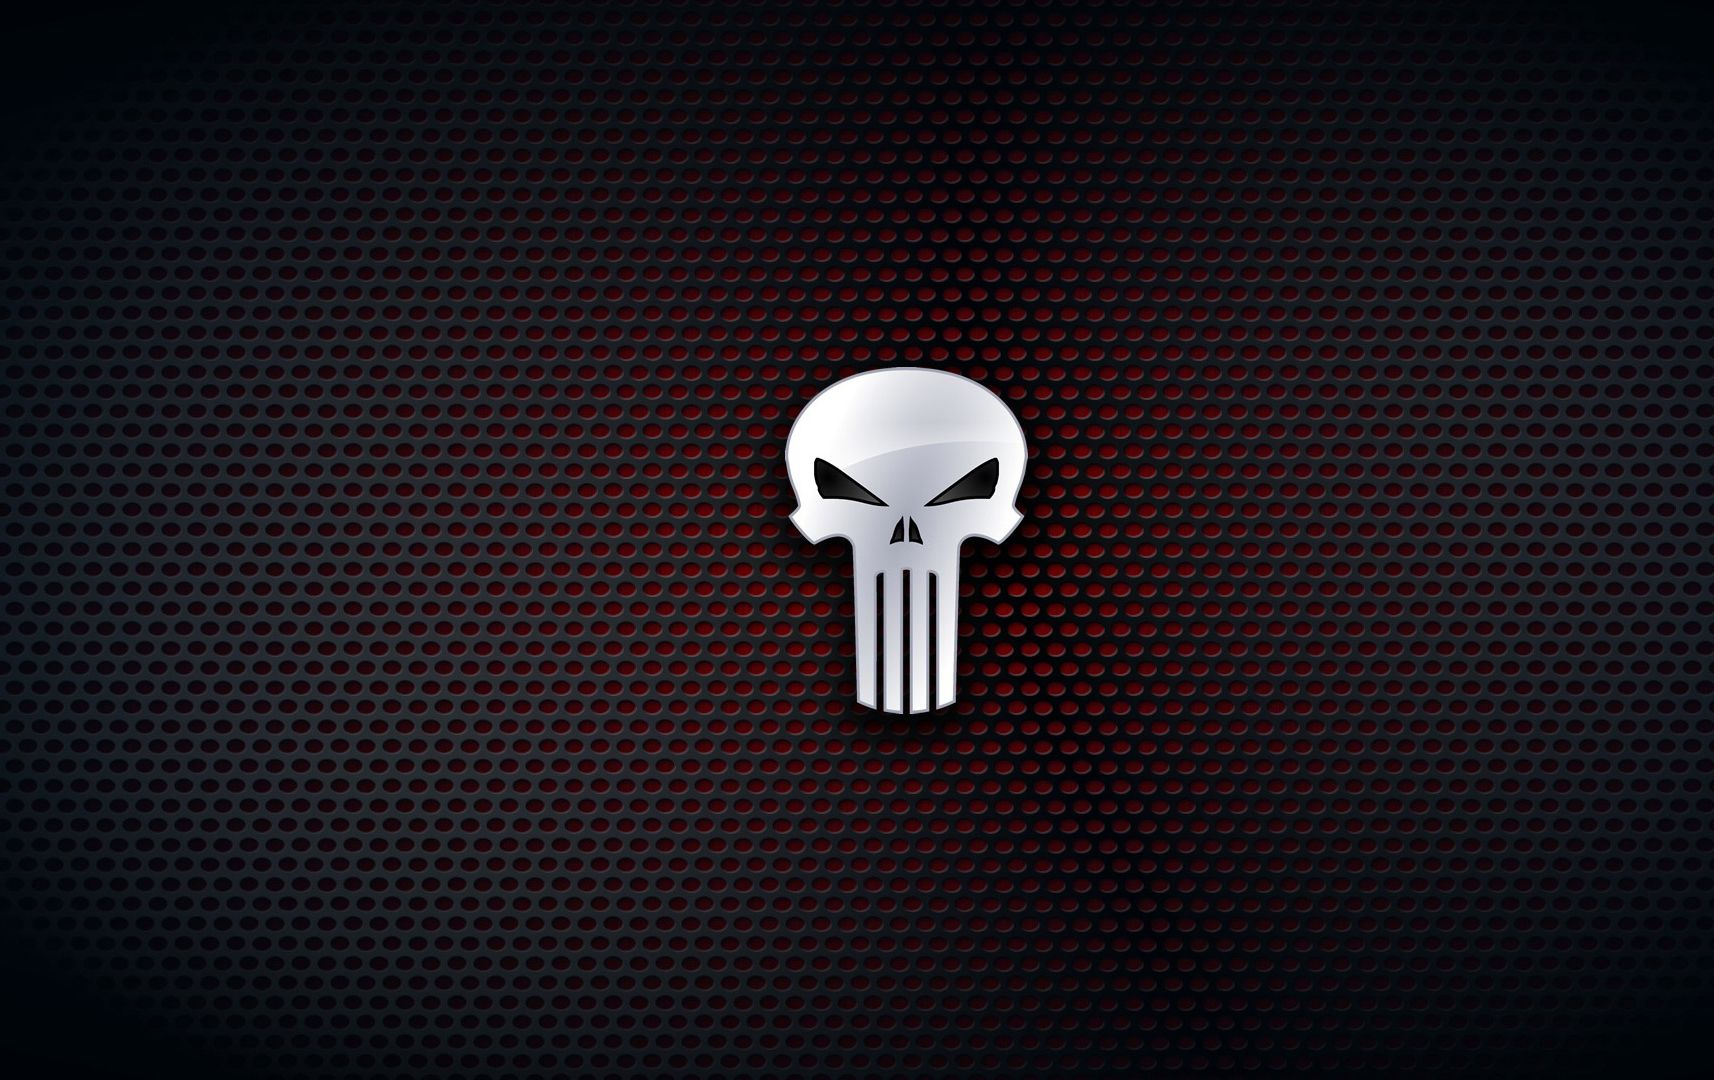 Punisher Logo desktop hd wallpapers | Only hd wallpapers